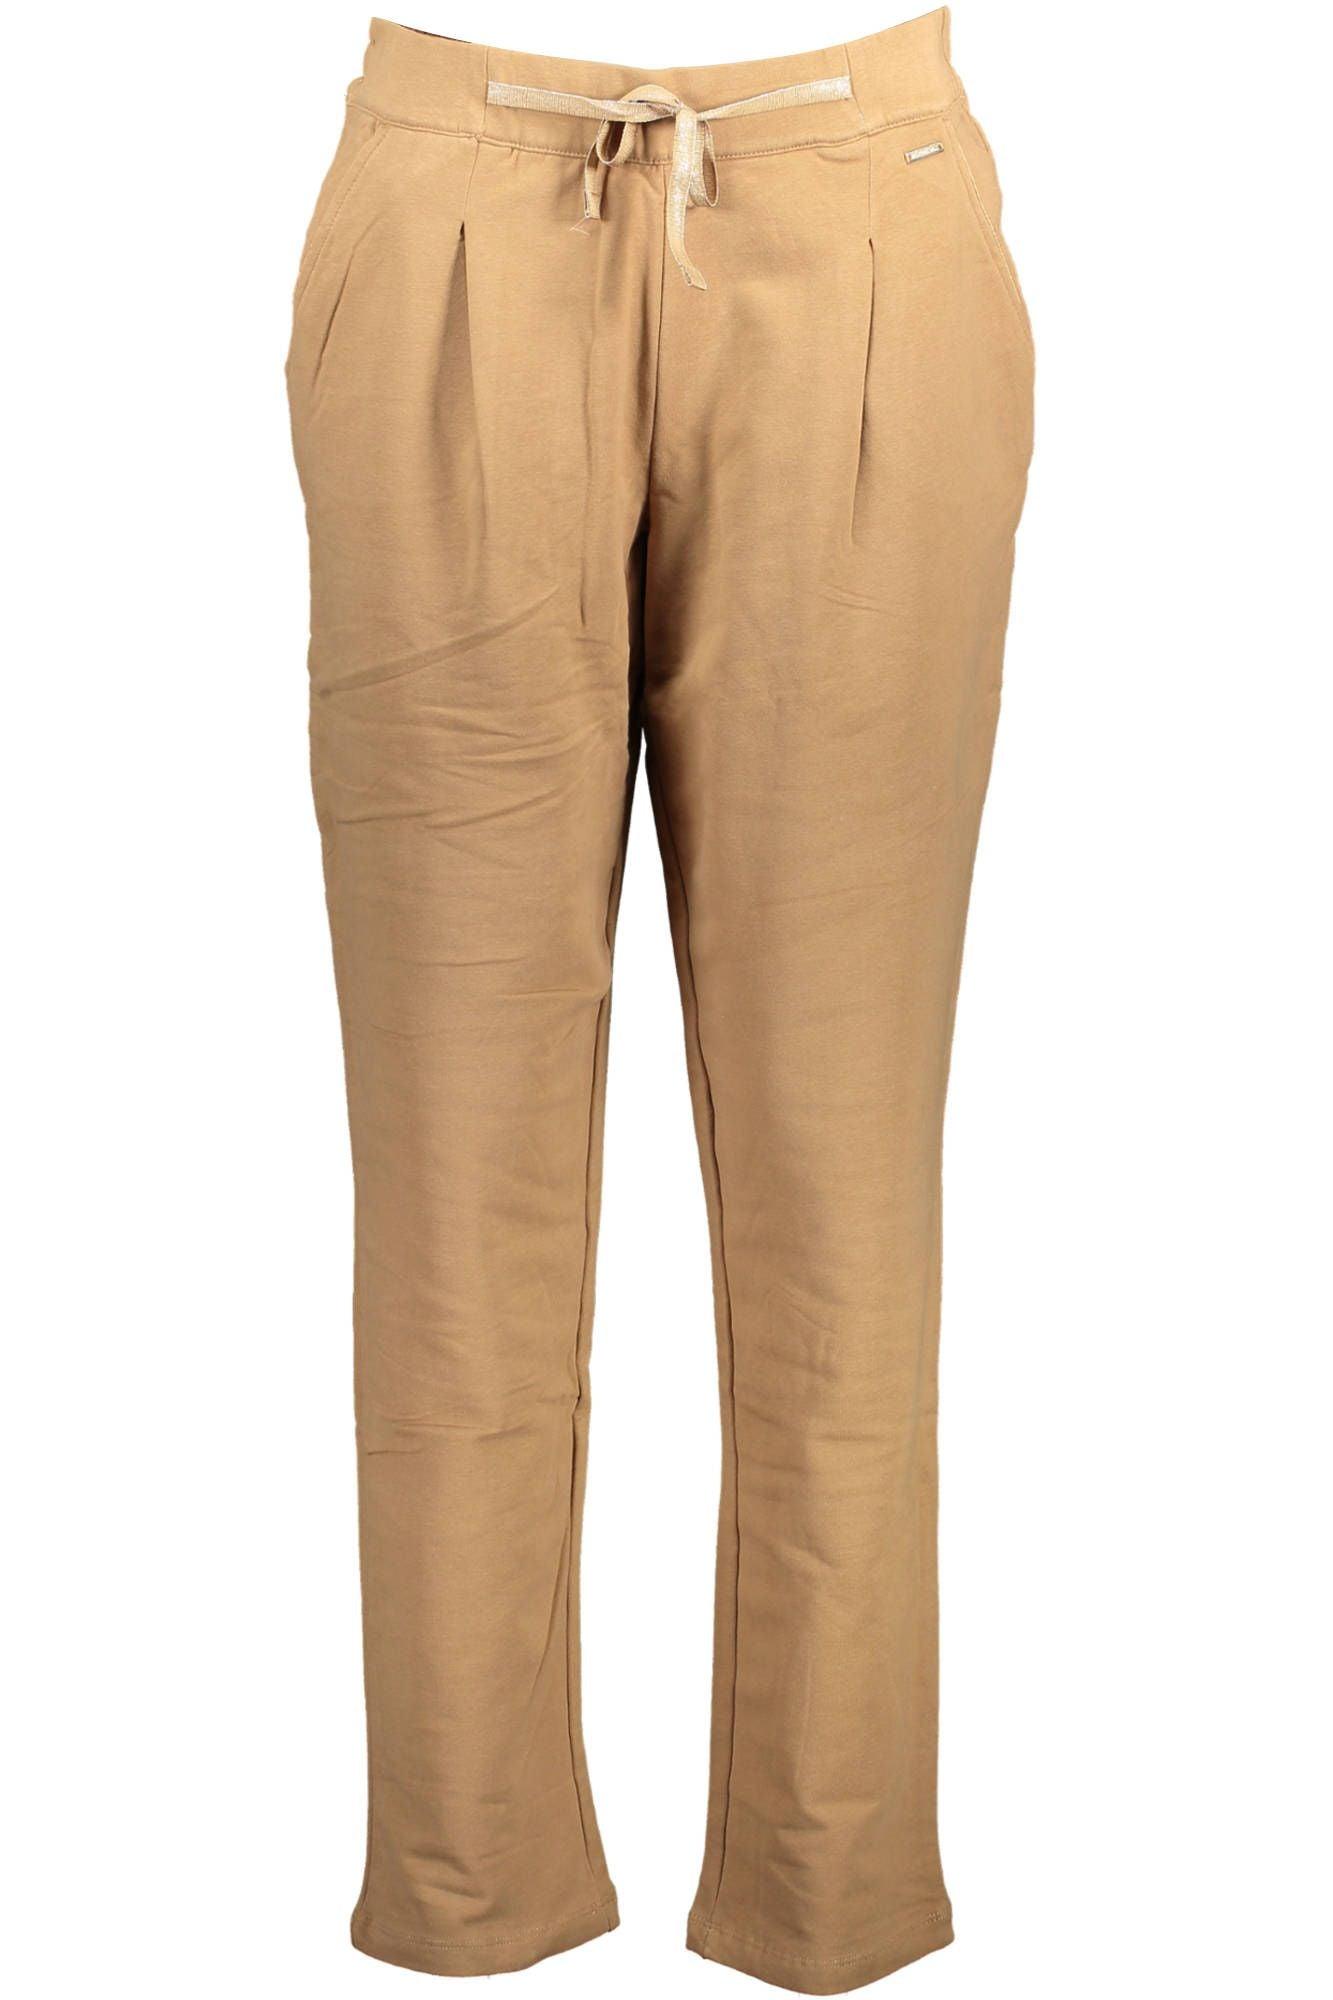 U.S. Polo Assn. Pants for Men | Mercari